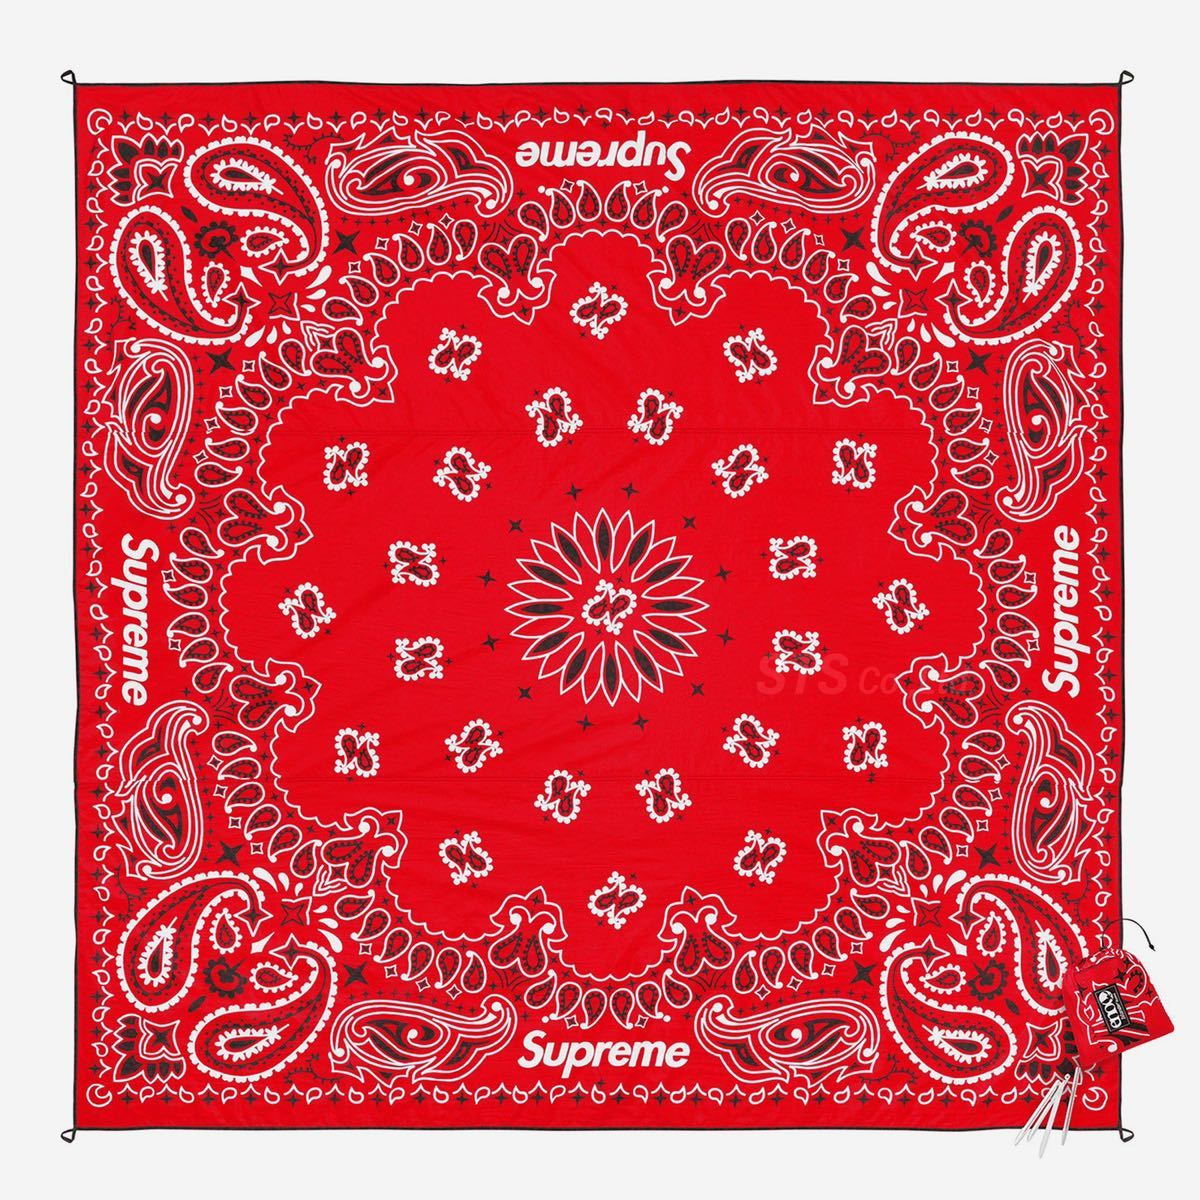 Yahoo!オークション -「supreme blanket」の落札相場・落札価格